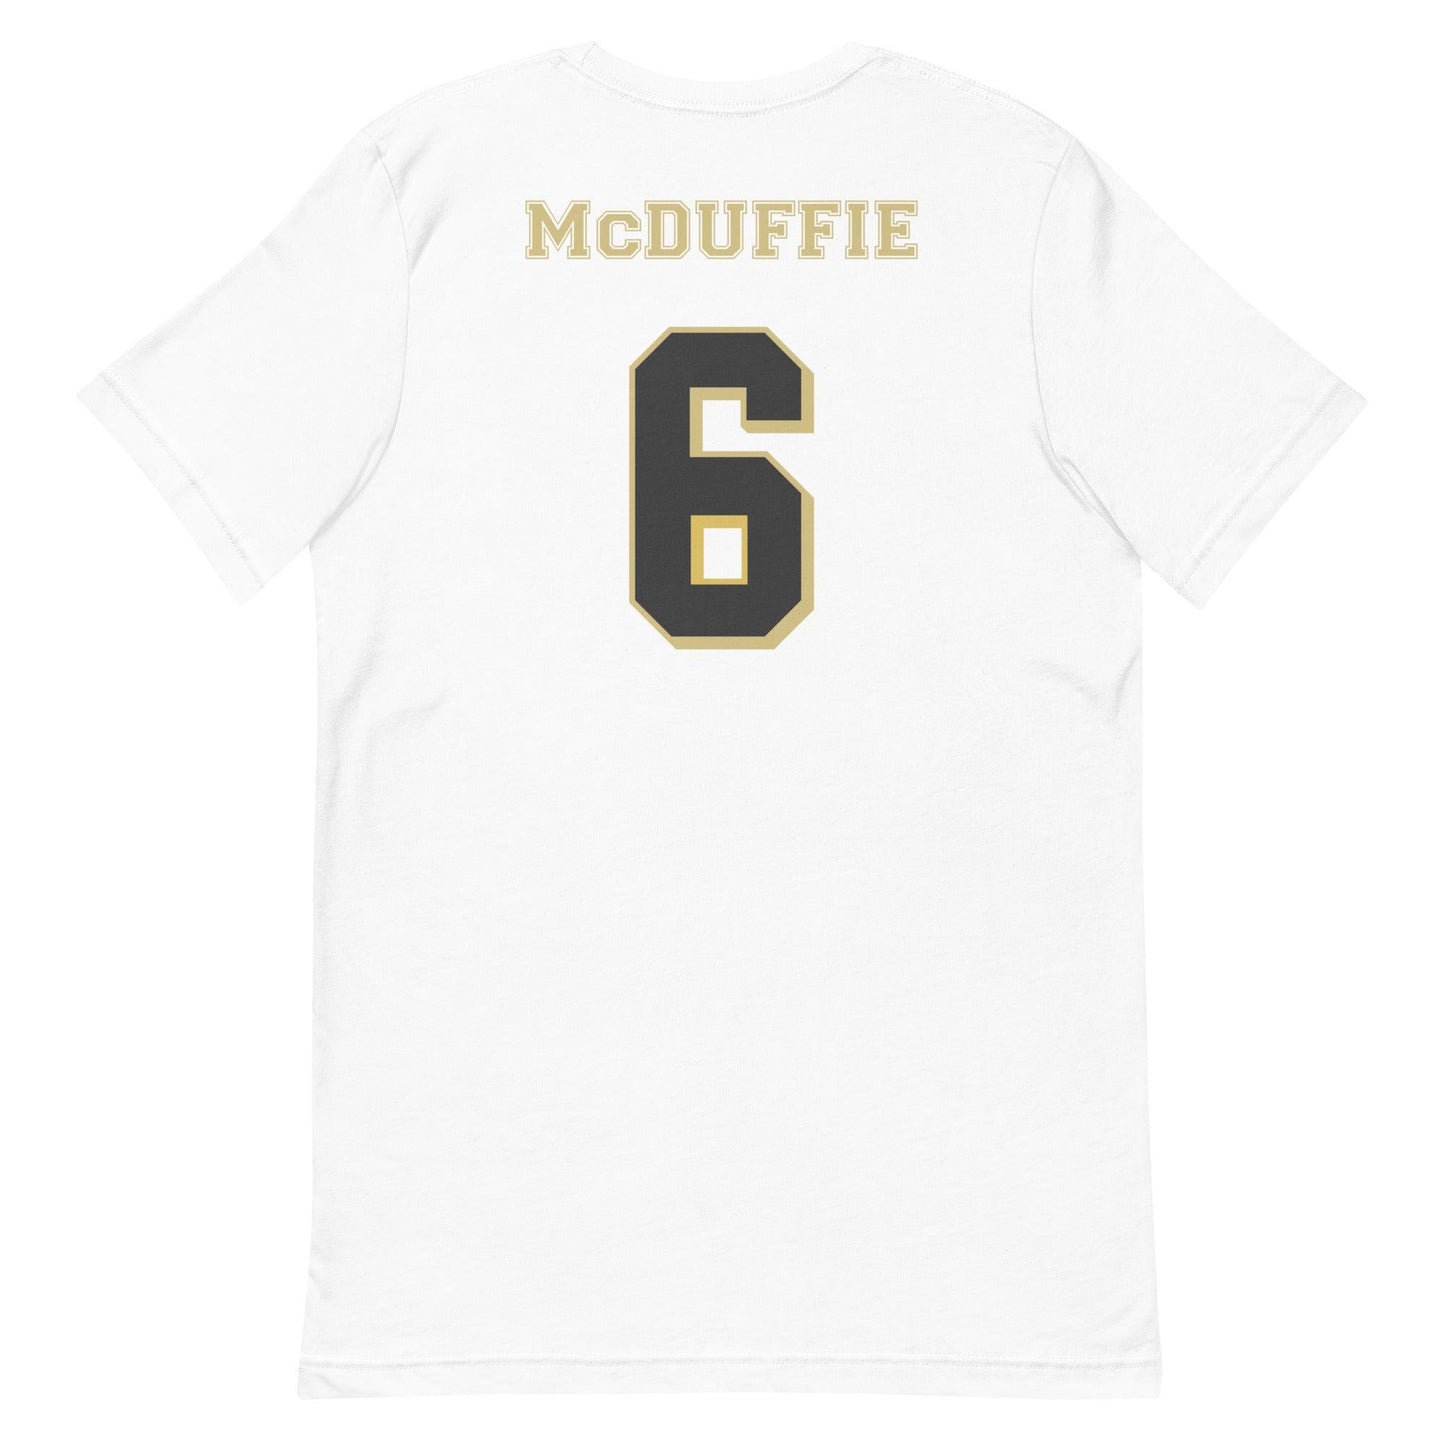 Dylan McDuffie "Jersey" t-shirt - Fan Arch